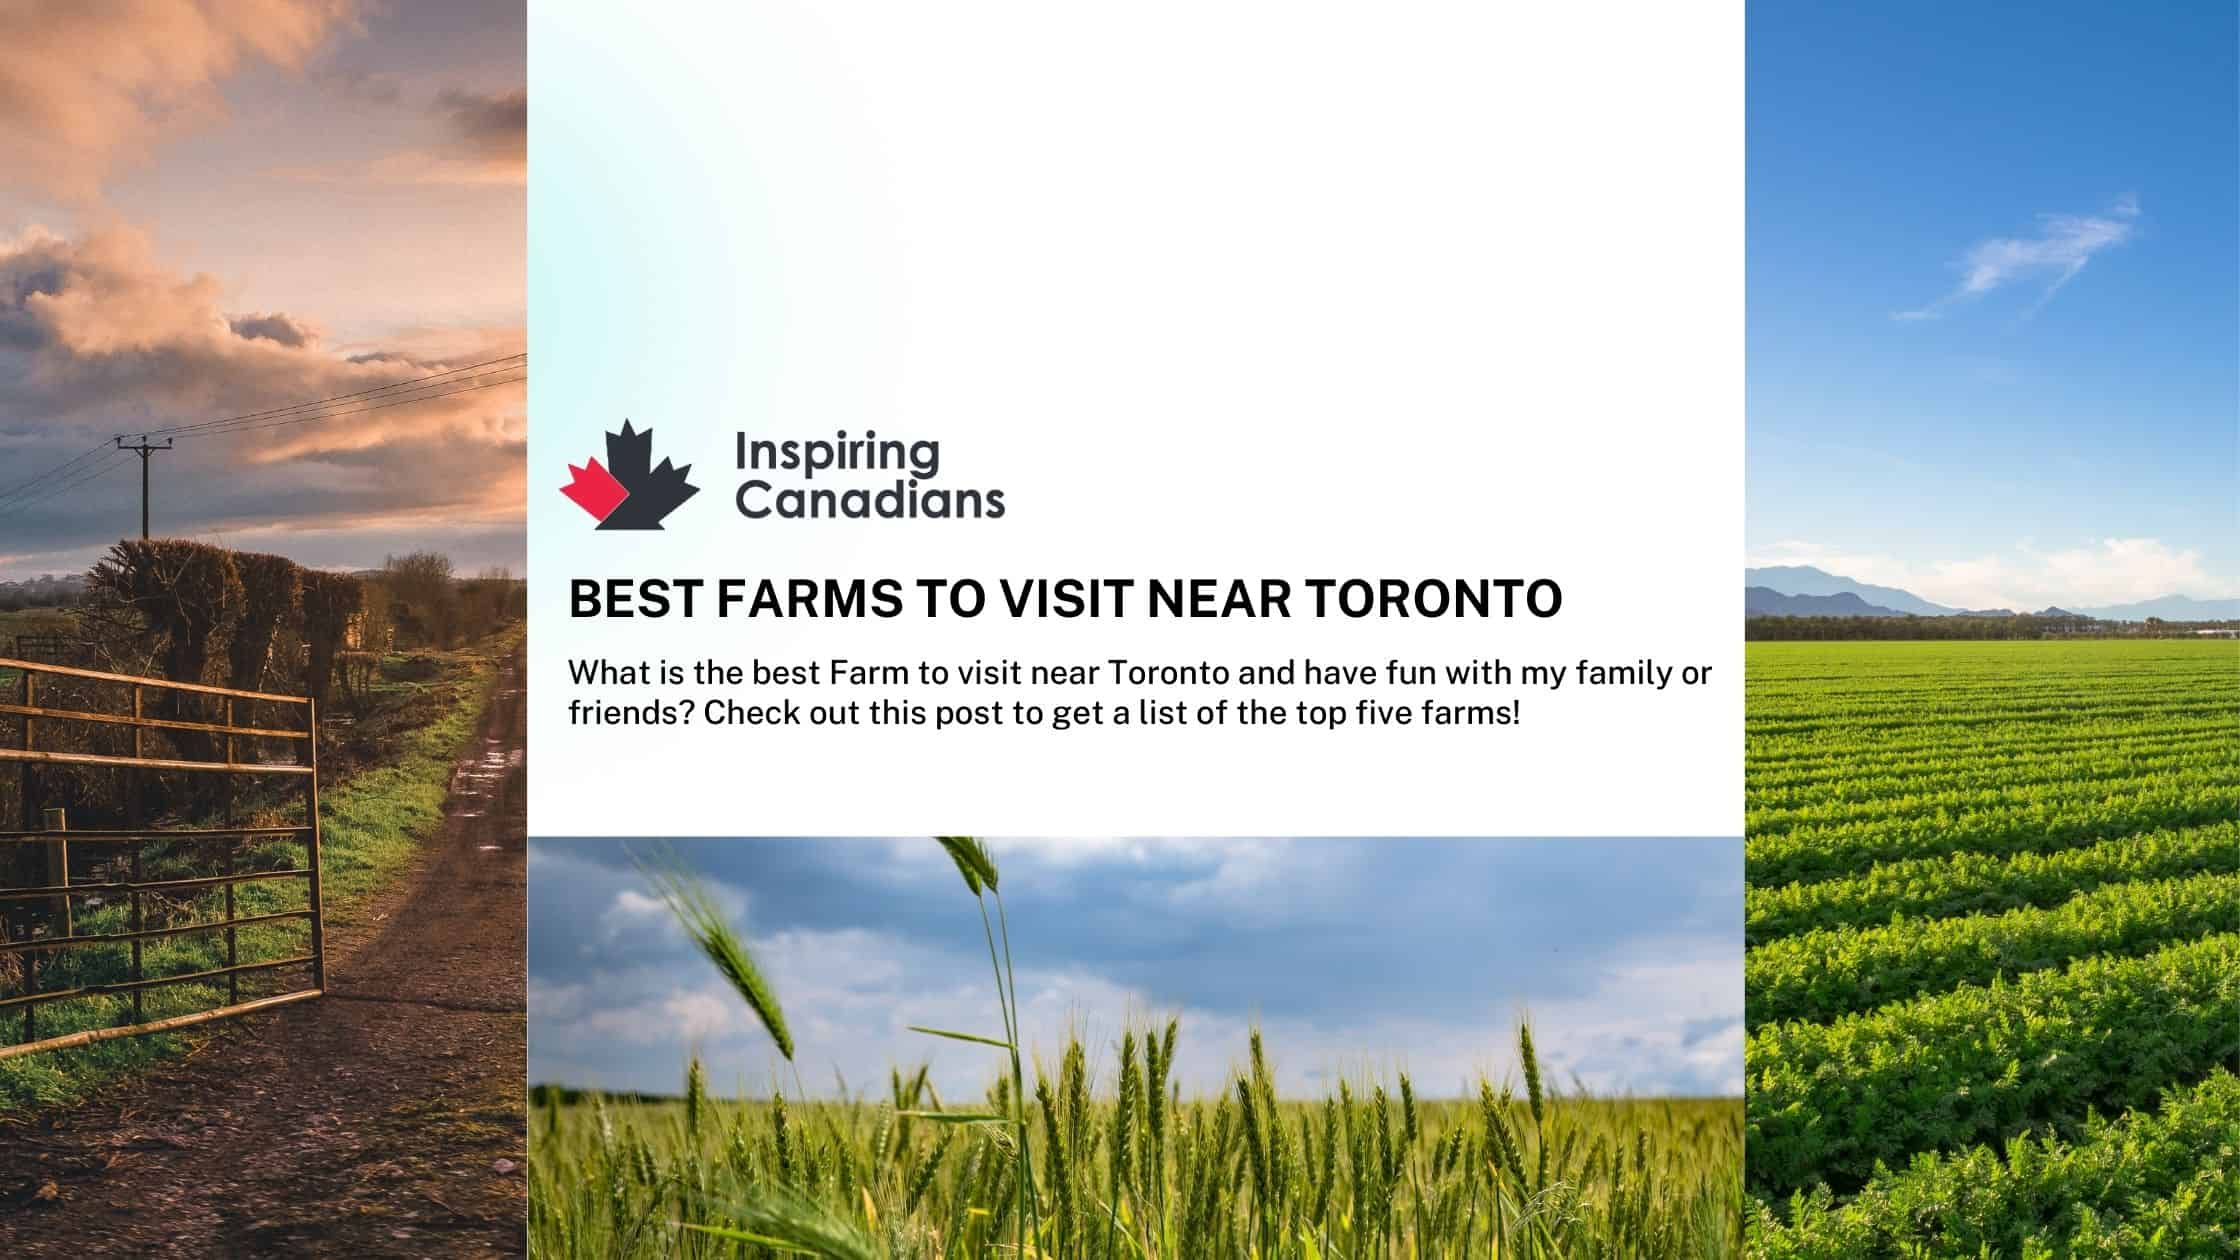 Best Farms to Visit Near Toronto